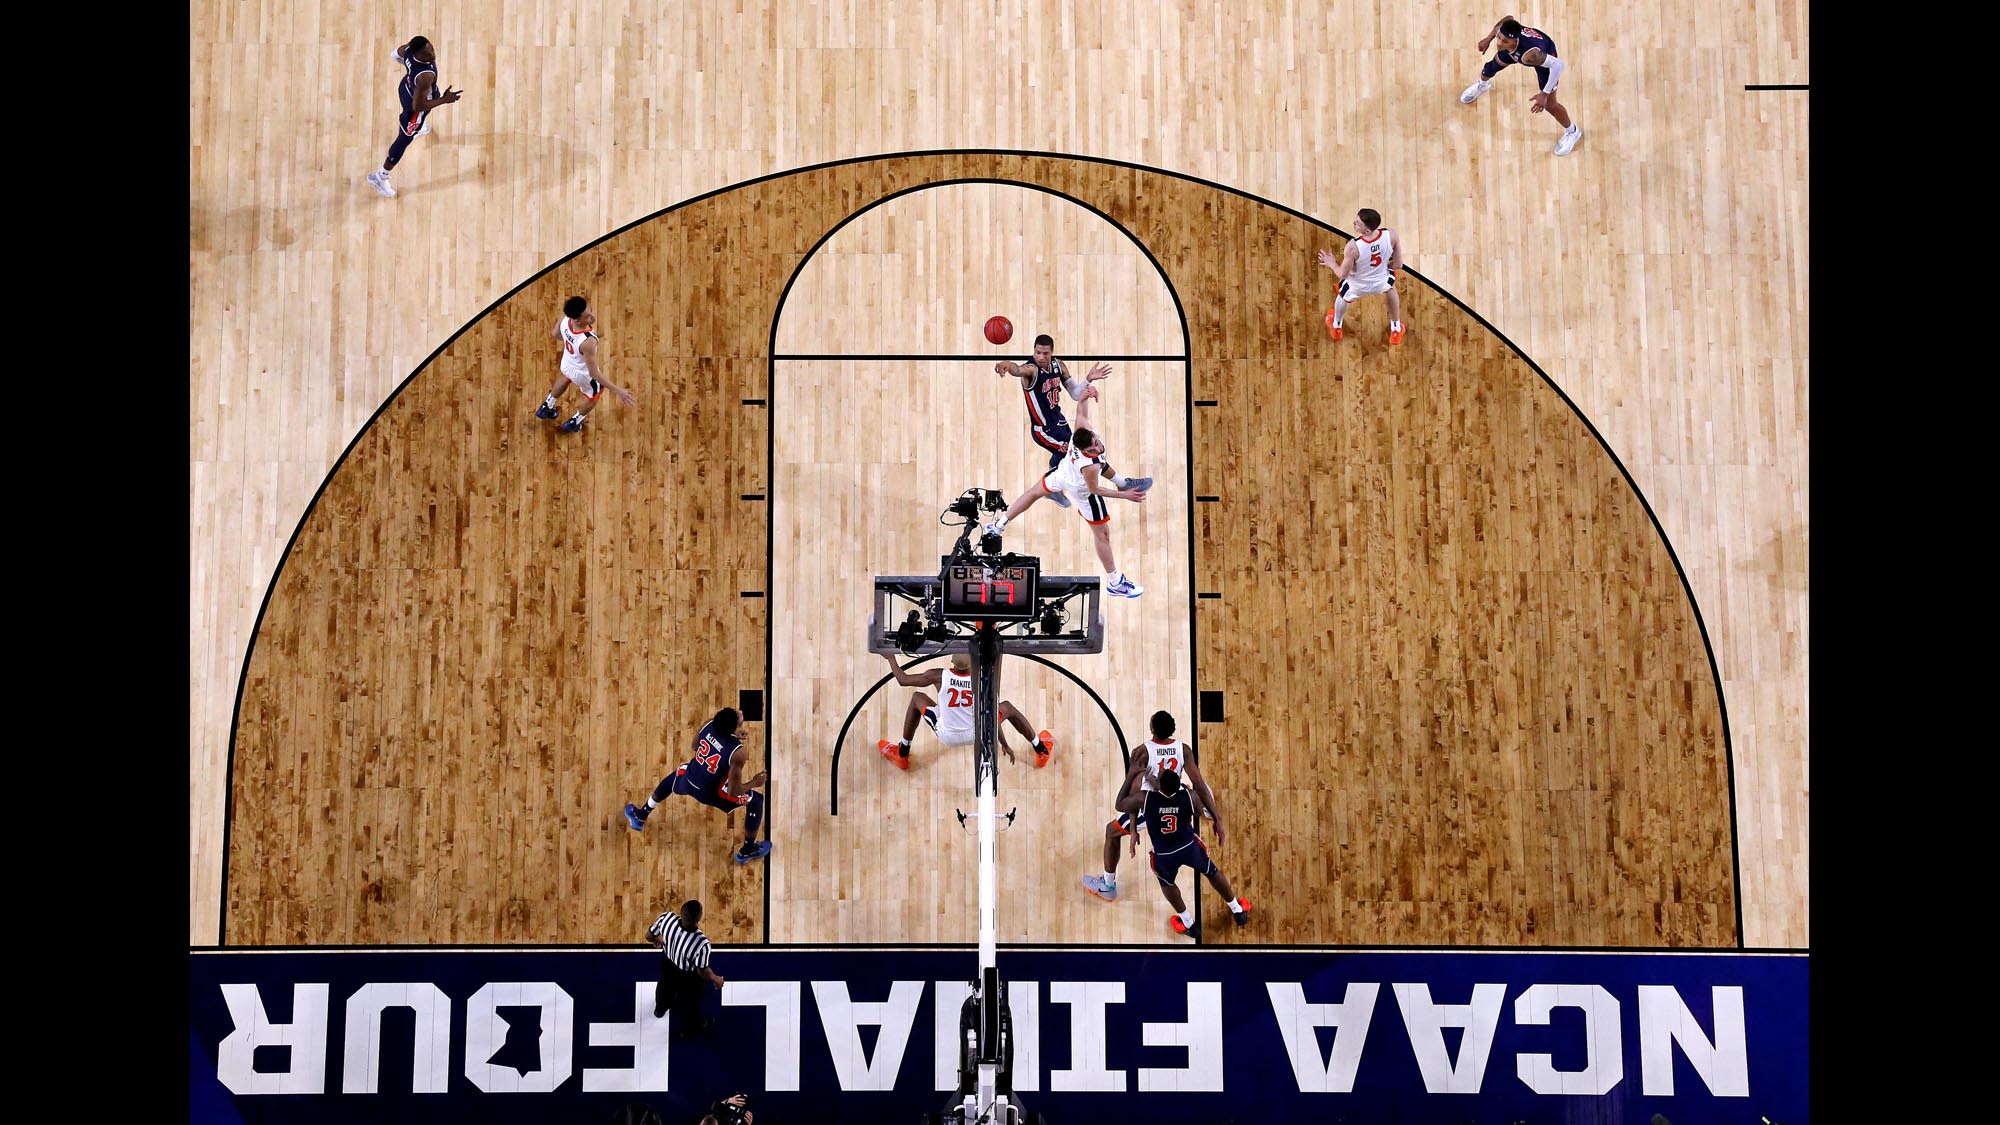 NBA Sacramento Kings On-Court Shooting Jersey, Medium,Black : :  Sports, Fitness & Outdoors